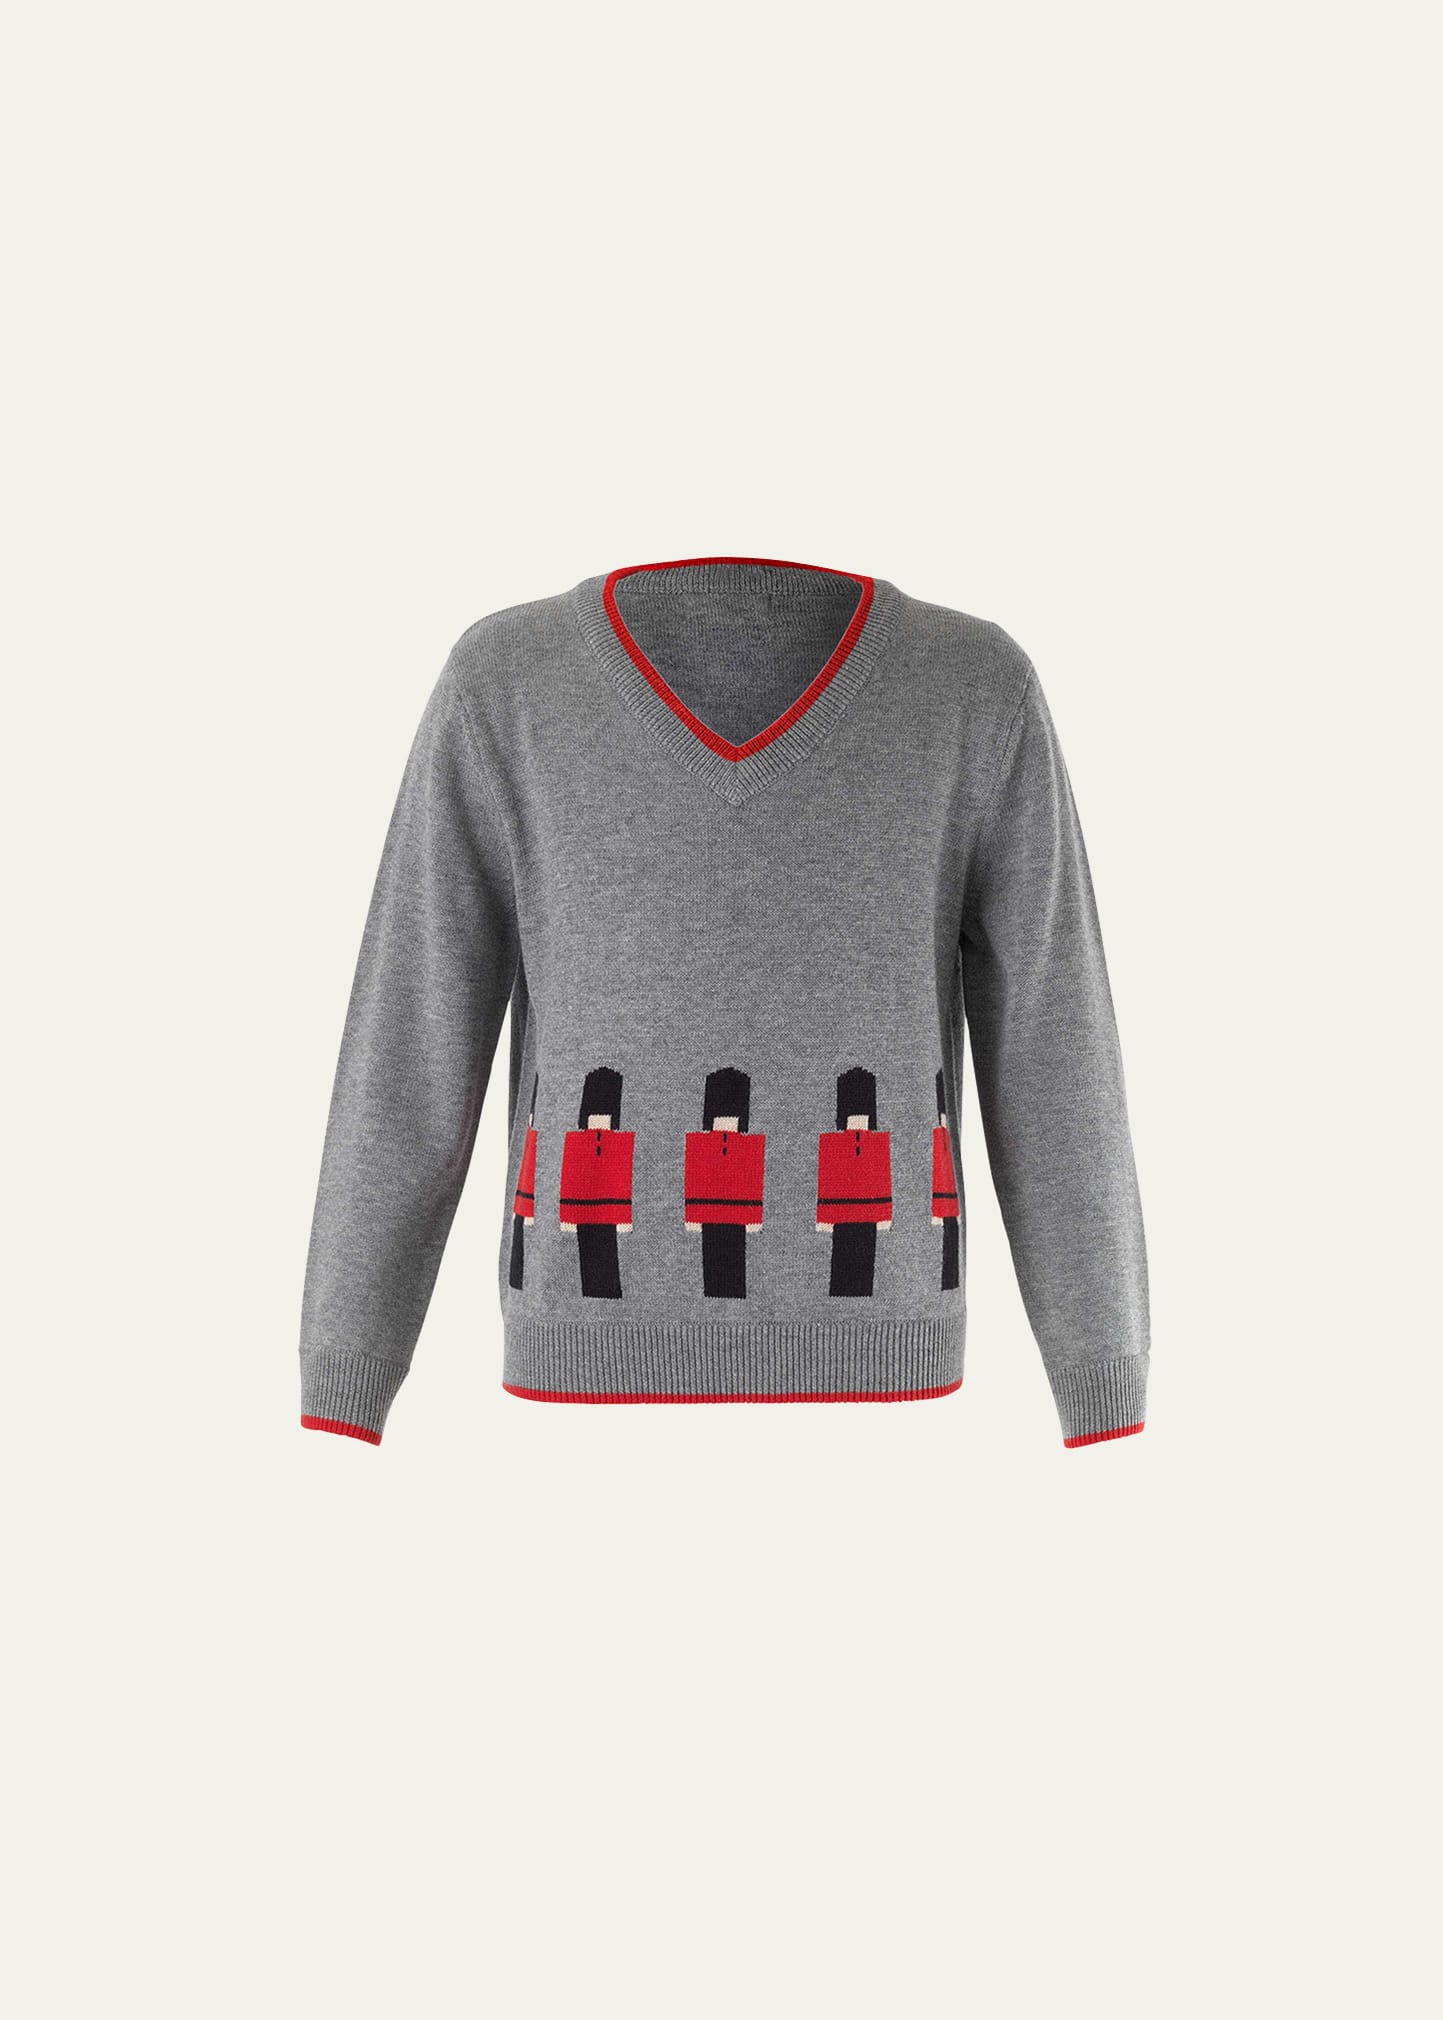 Boy's Royal Guards Intarsia Sweater, Size 2-10